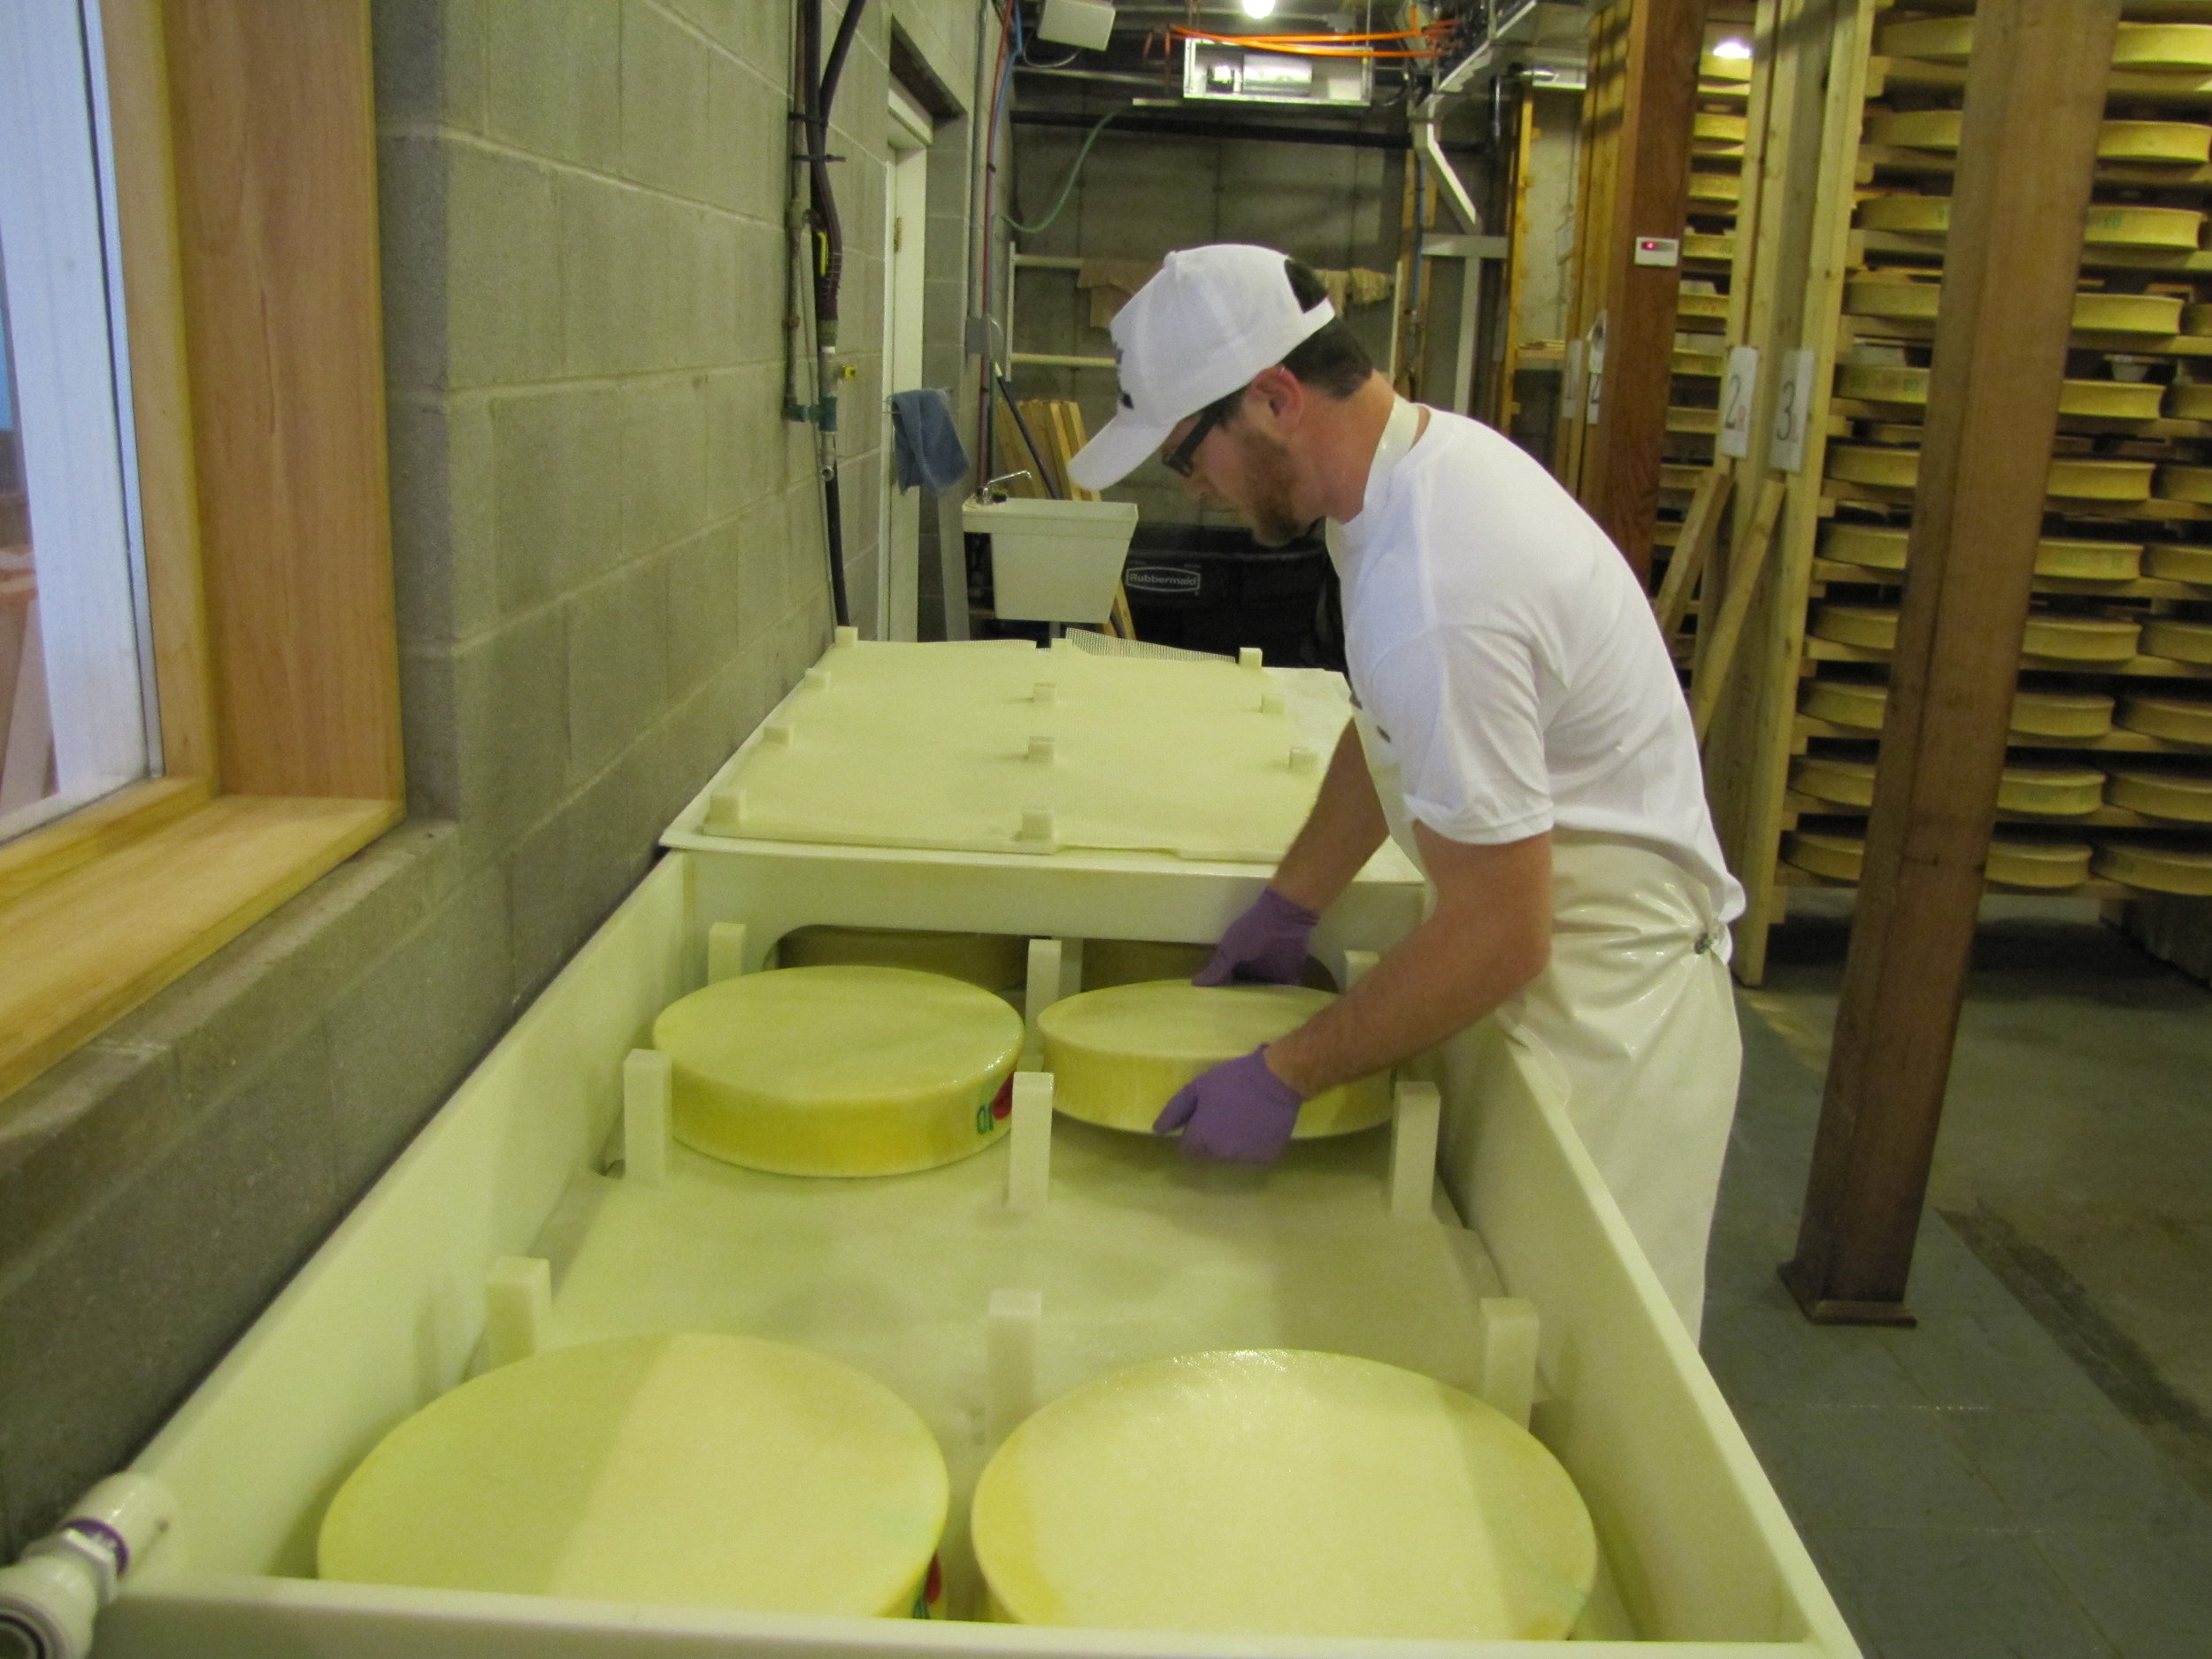 Brining the Cheese